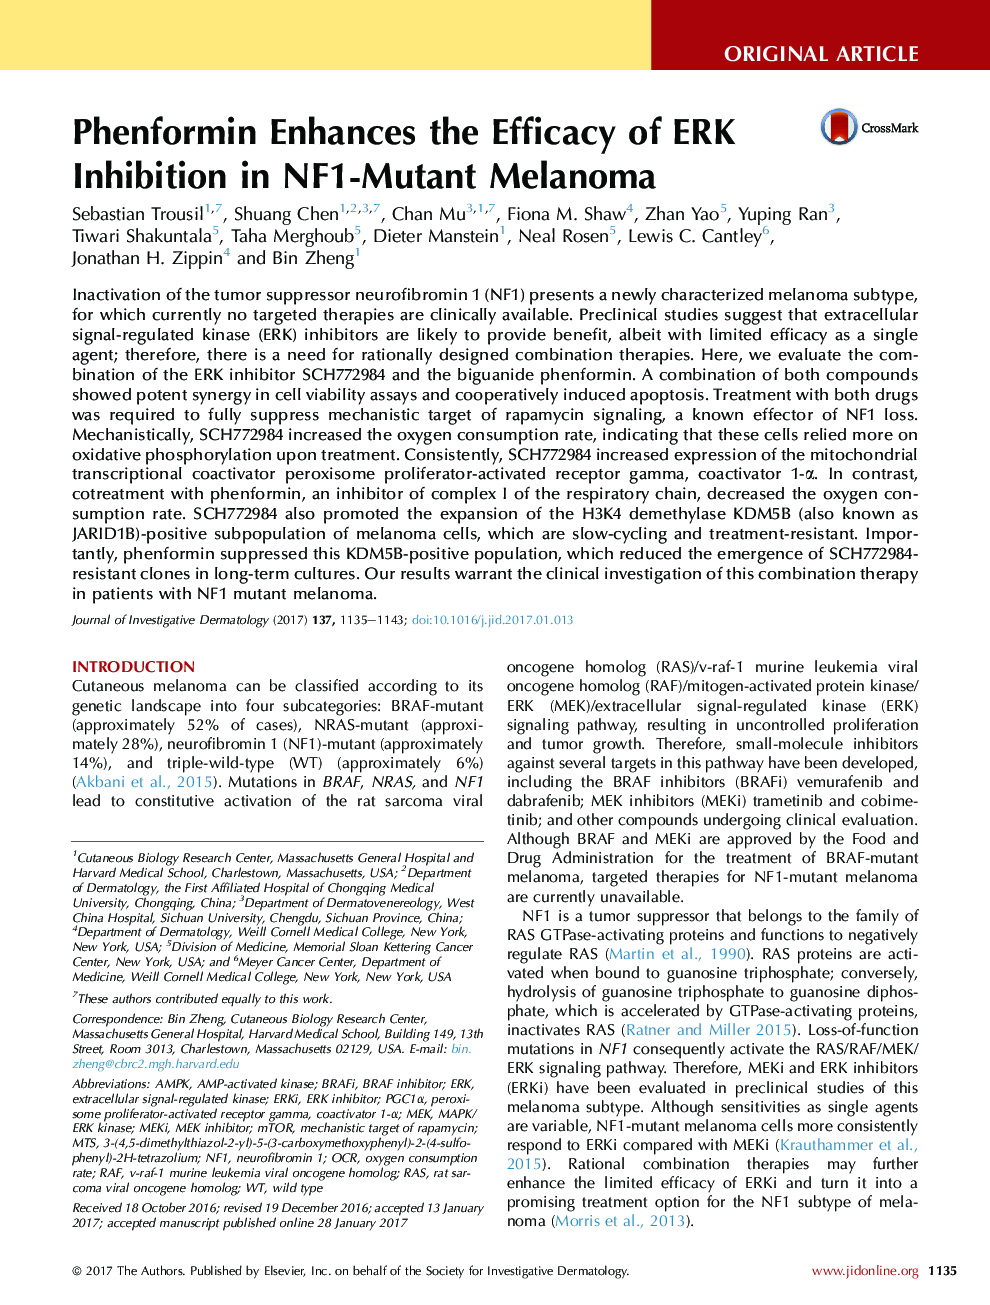 Phenformin Enhances the Efficacy of ERK Inhibition in NF1-Mutant Melanoma